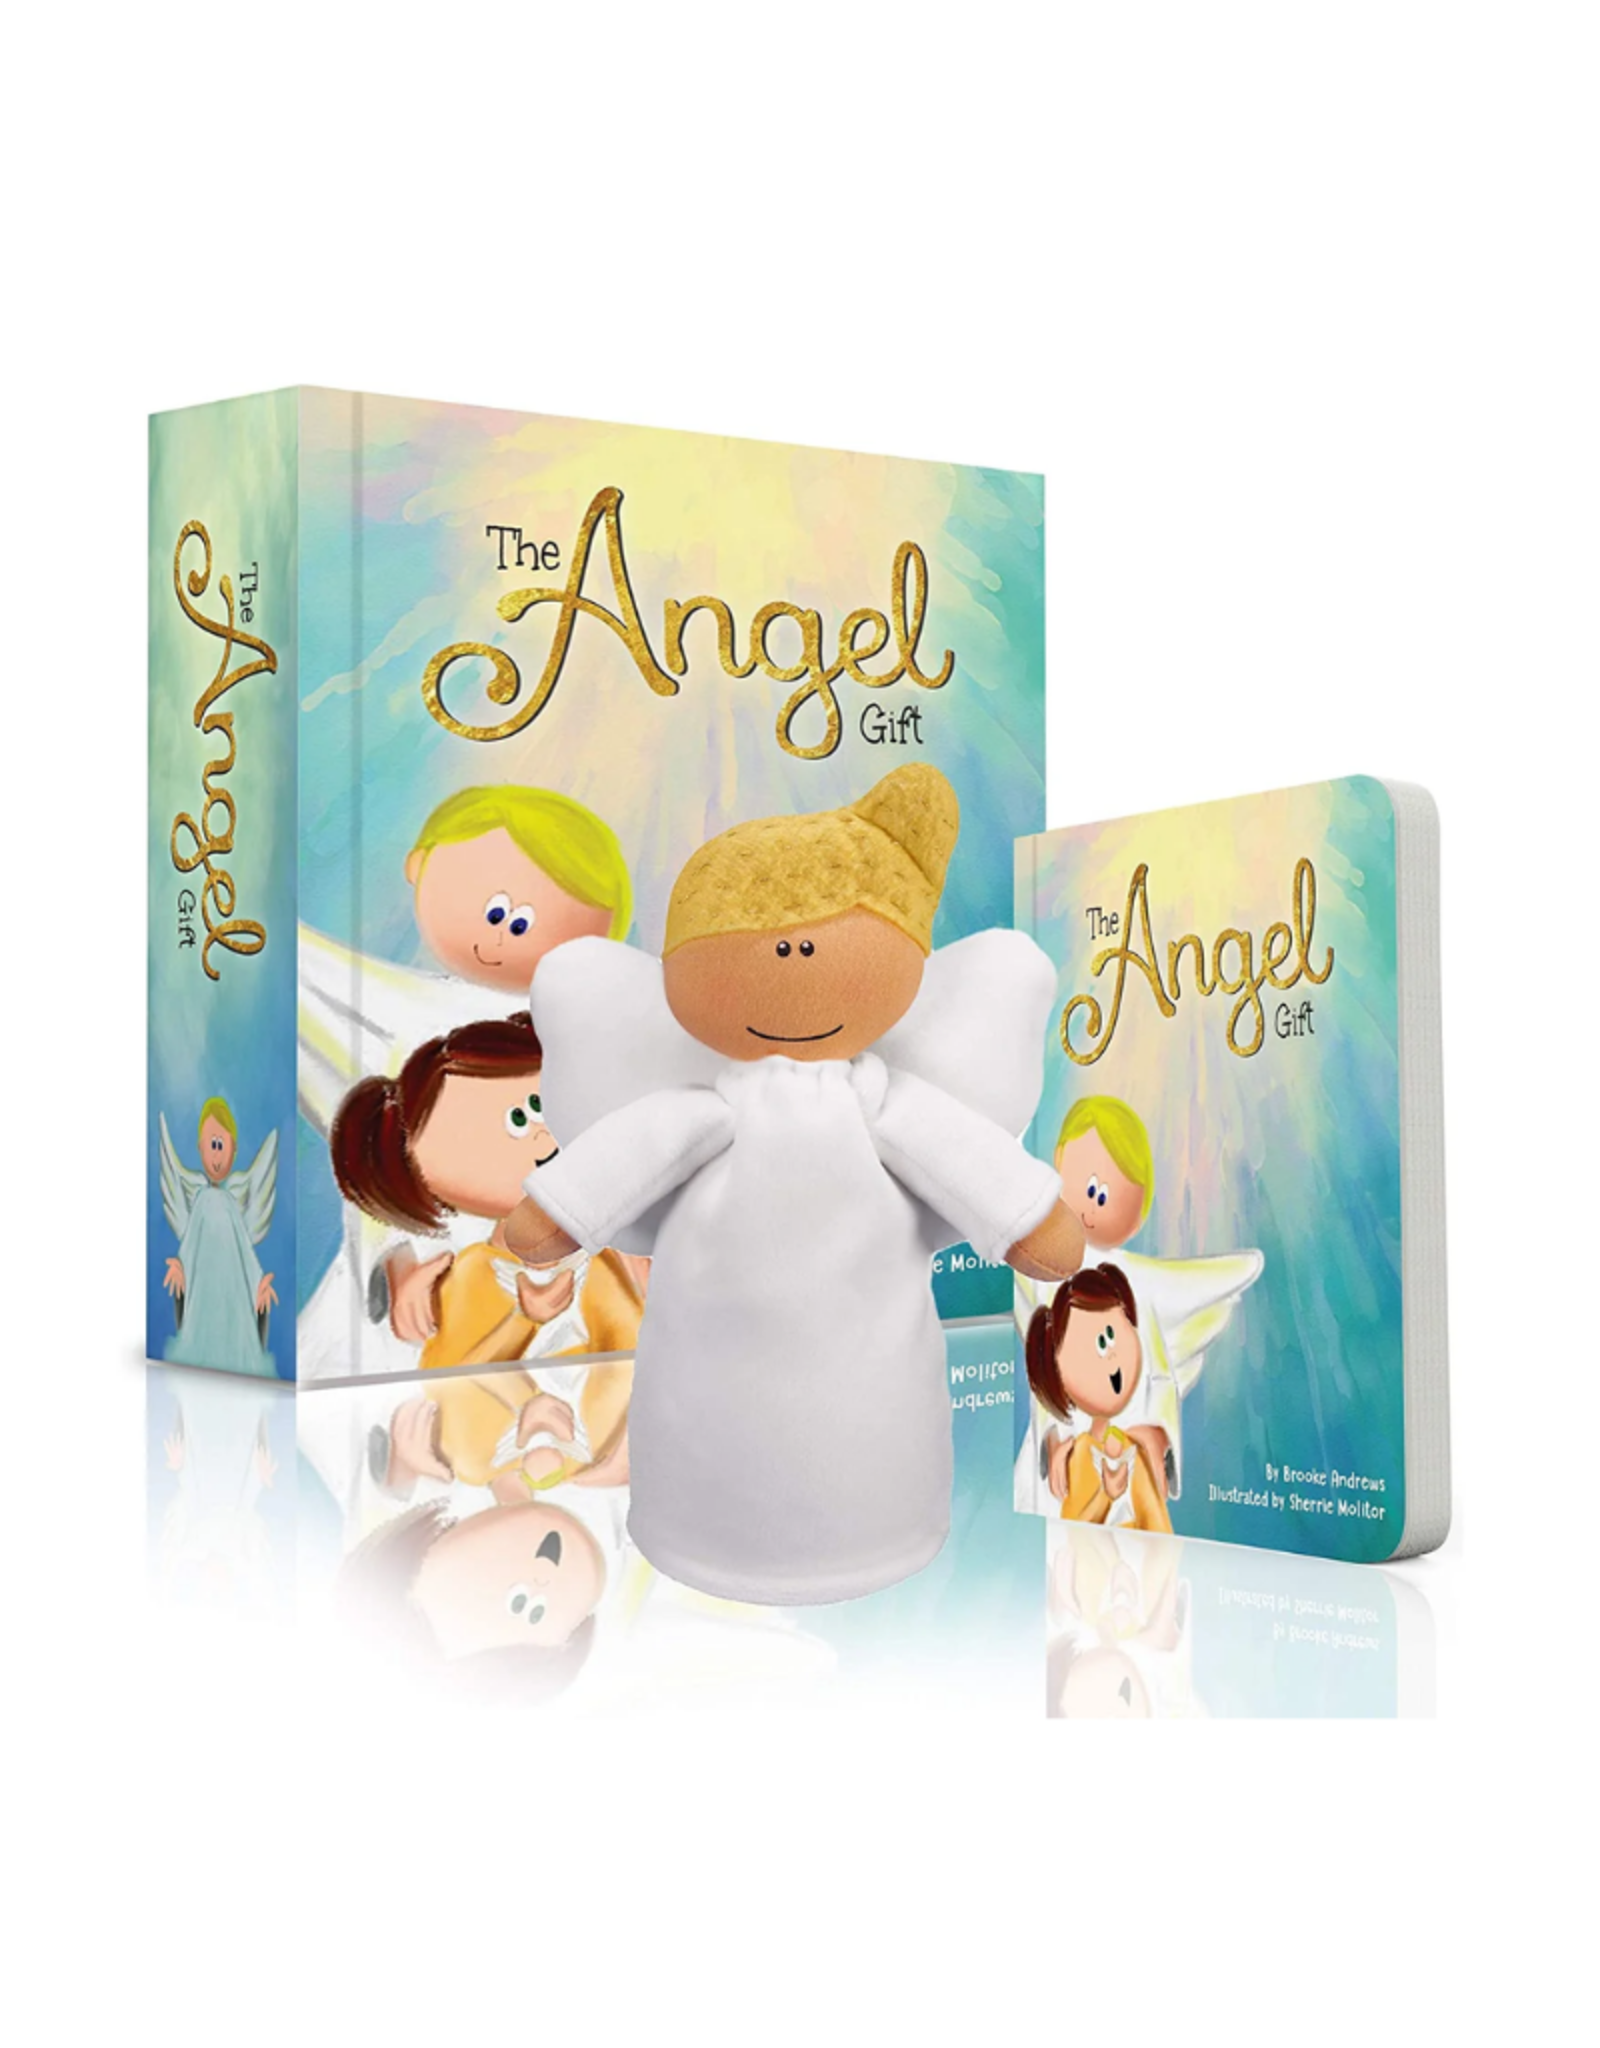 The Angel Gift Company The Angel Gift Box Set